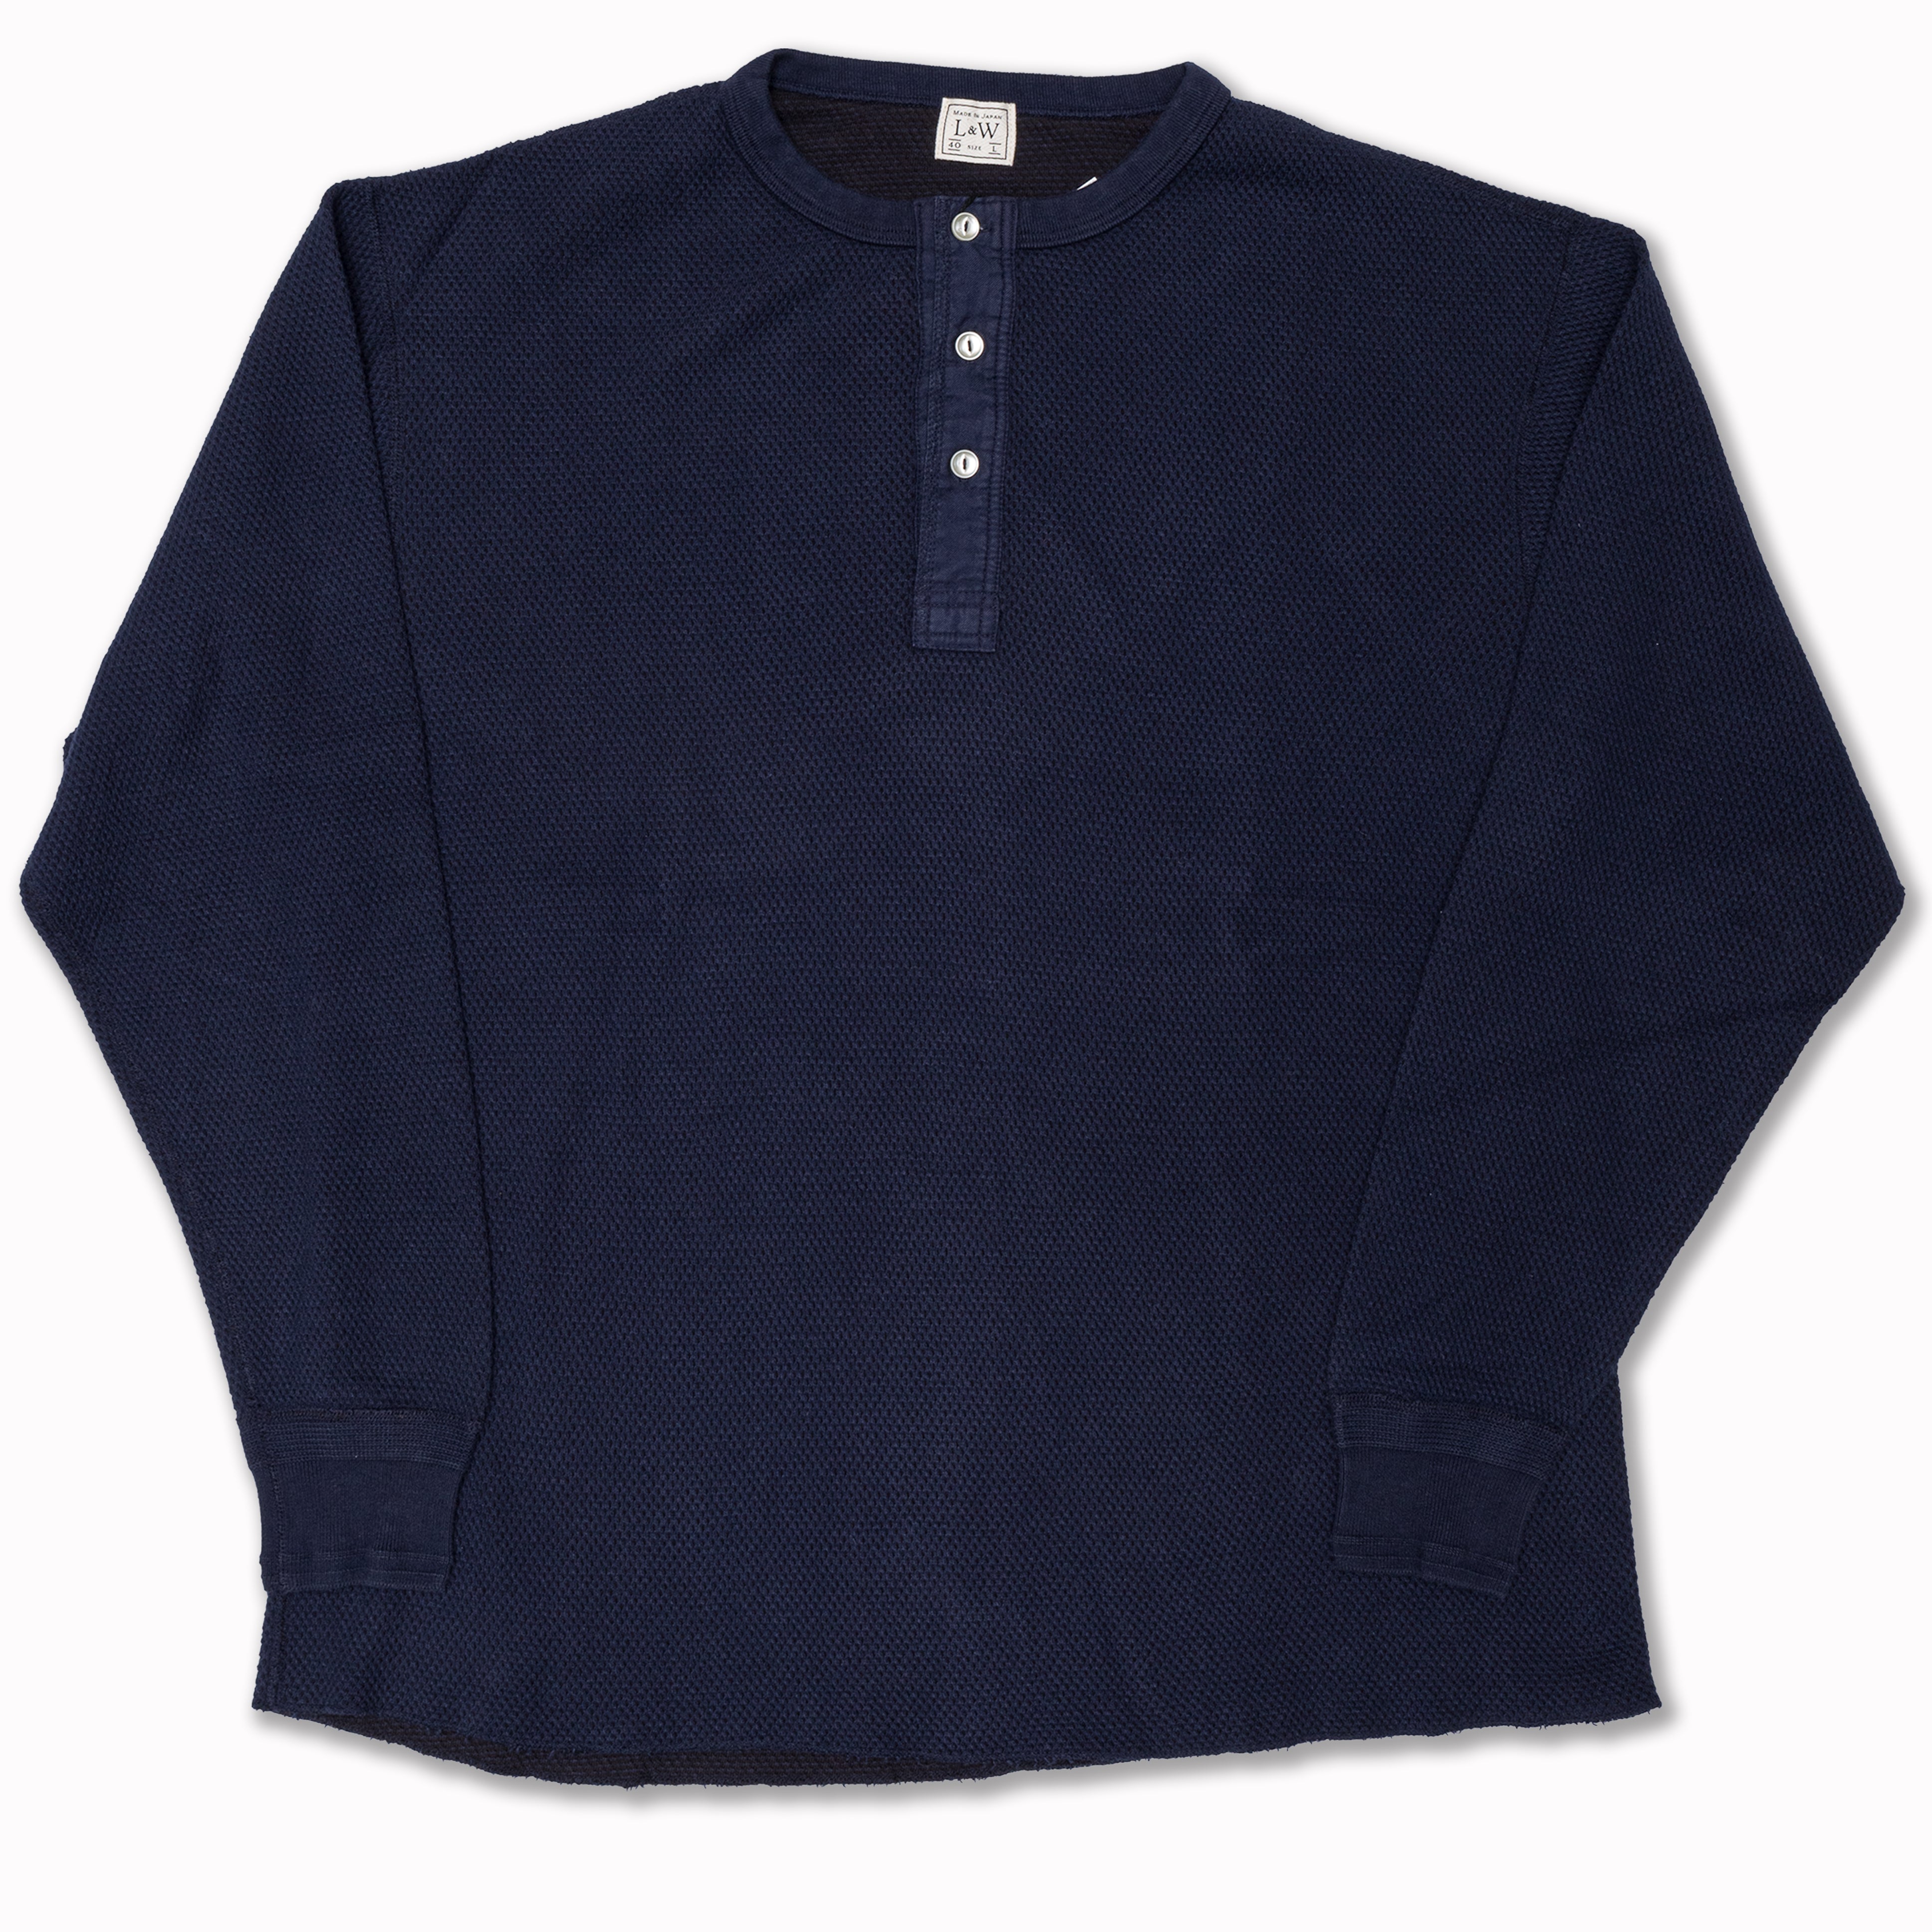 Recall Clothing, Geneva | Shirts, T-shirts, jackets, sweaters